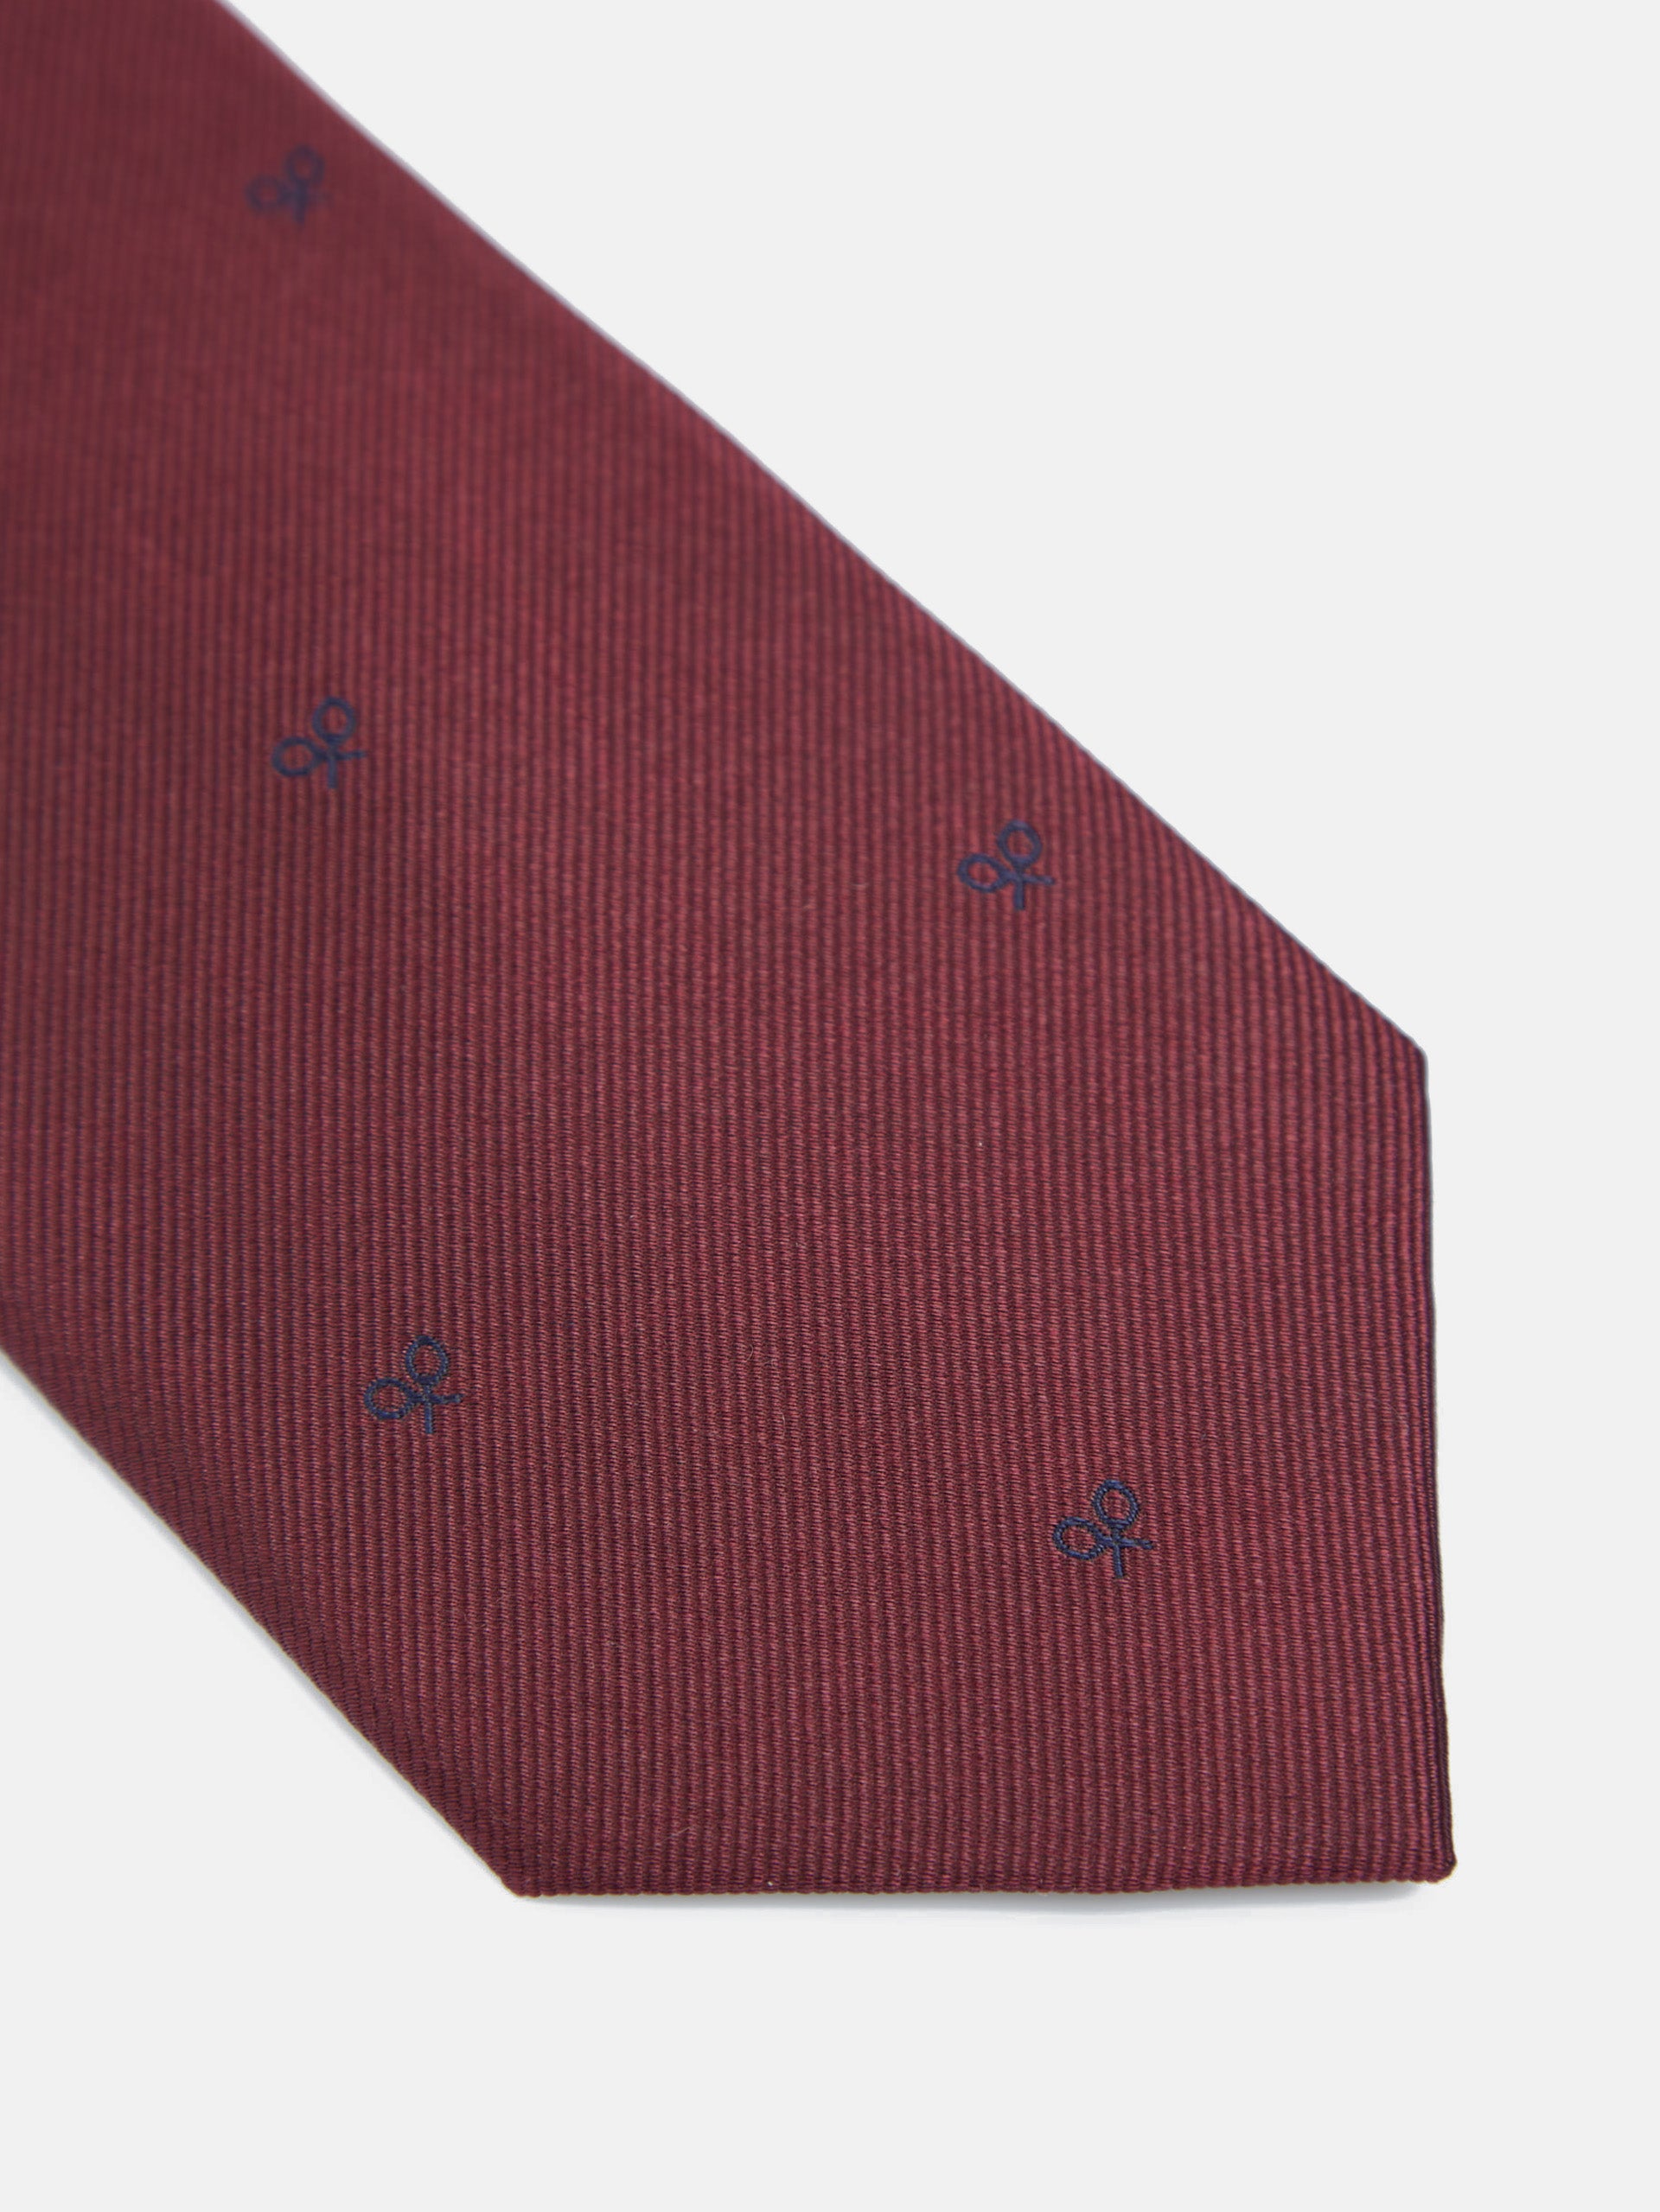 Silbon tie with burgundy racket motifs